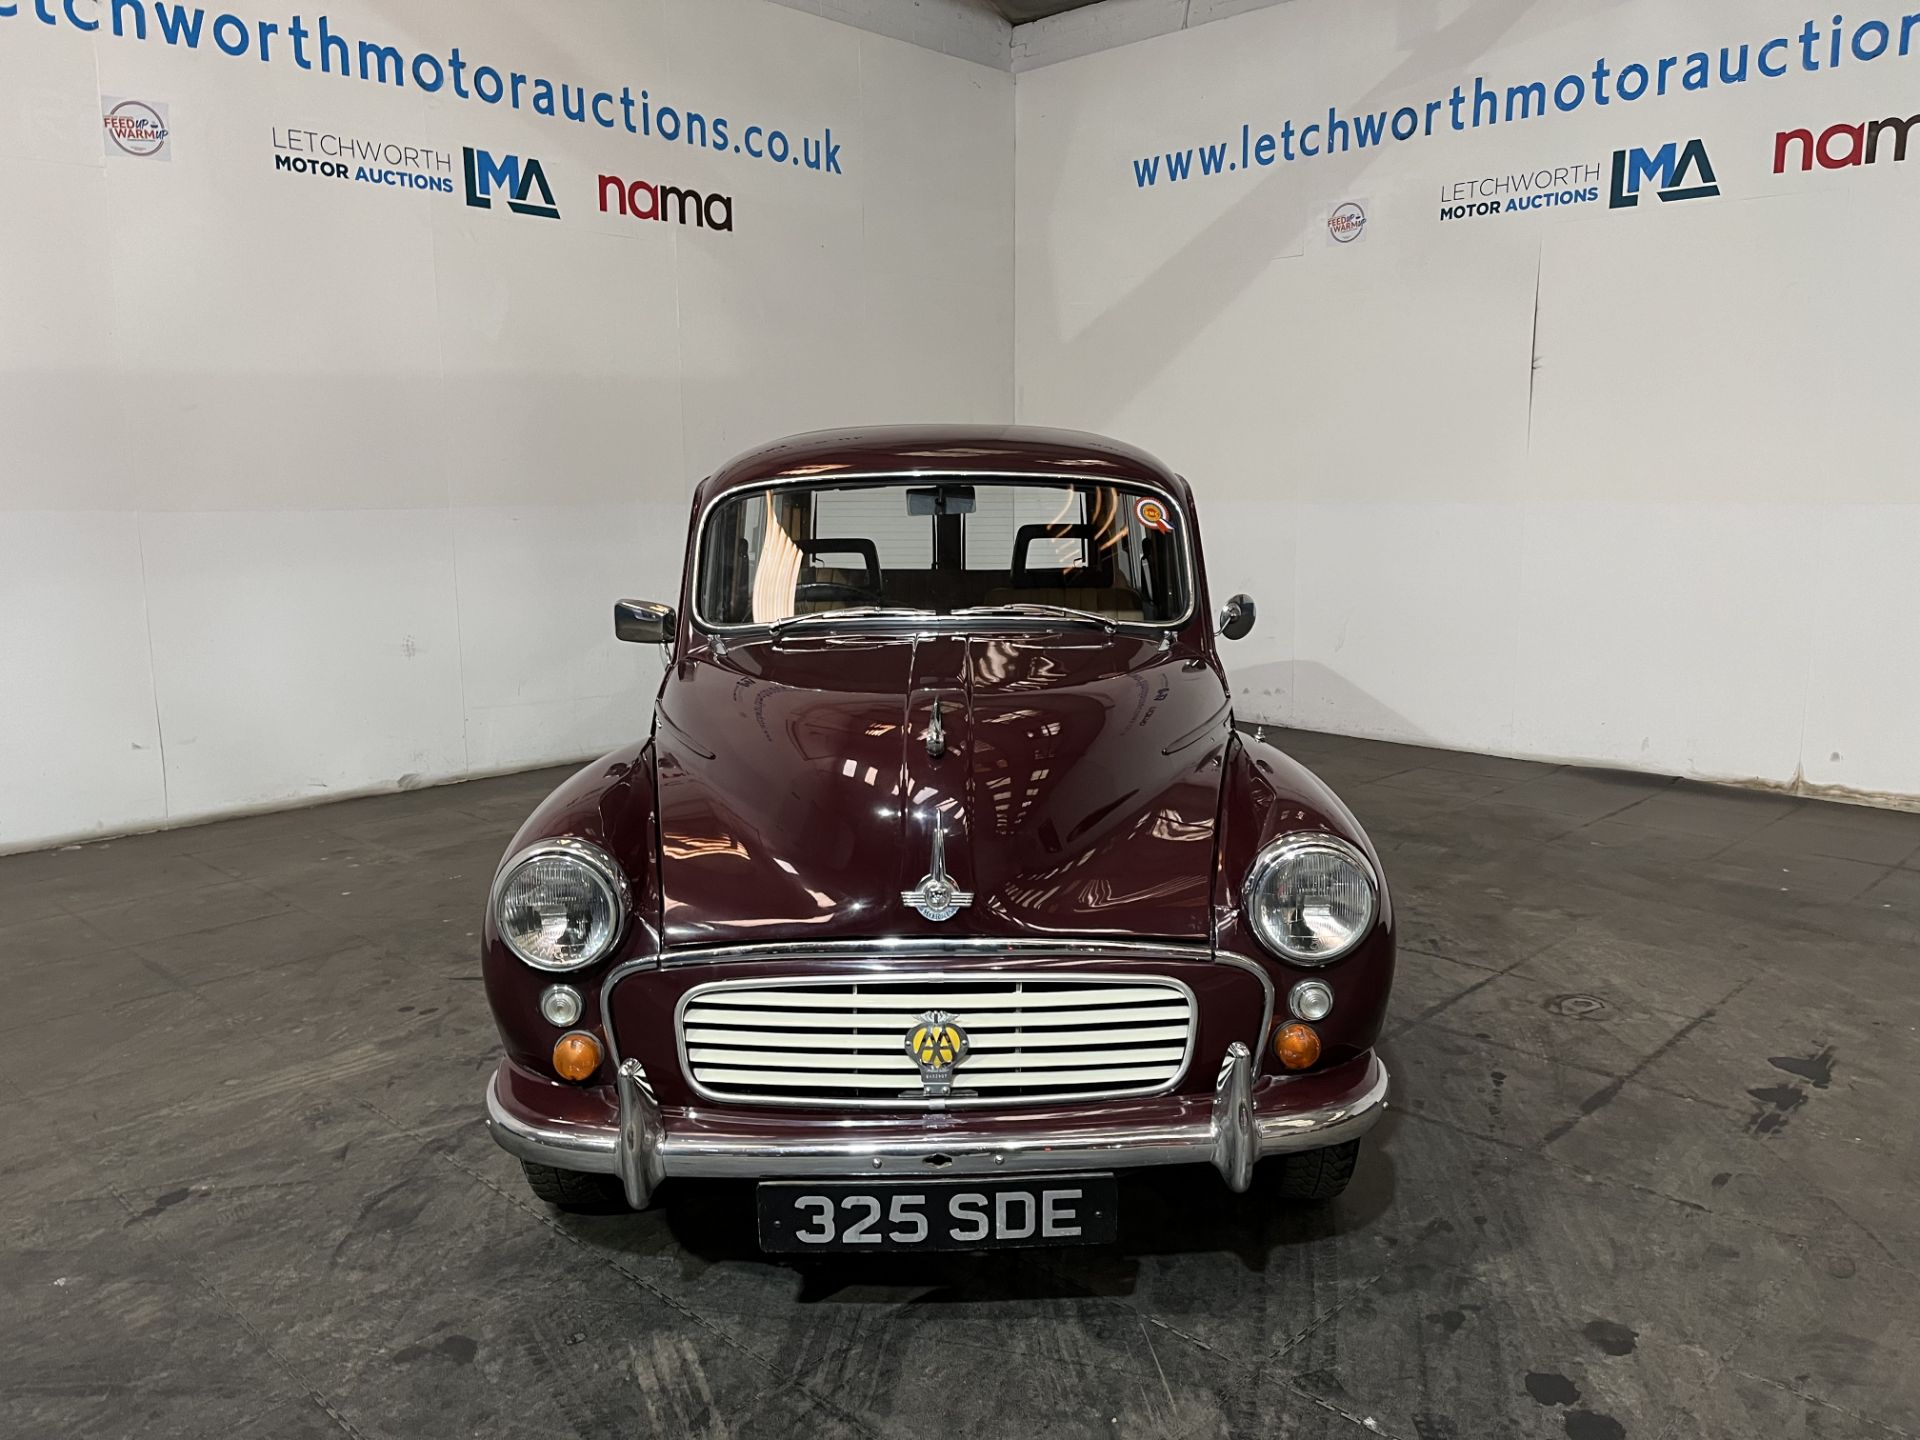 1963 Morris Minor 1000 Traveller - 1275cc - Image 2 of 17